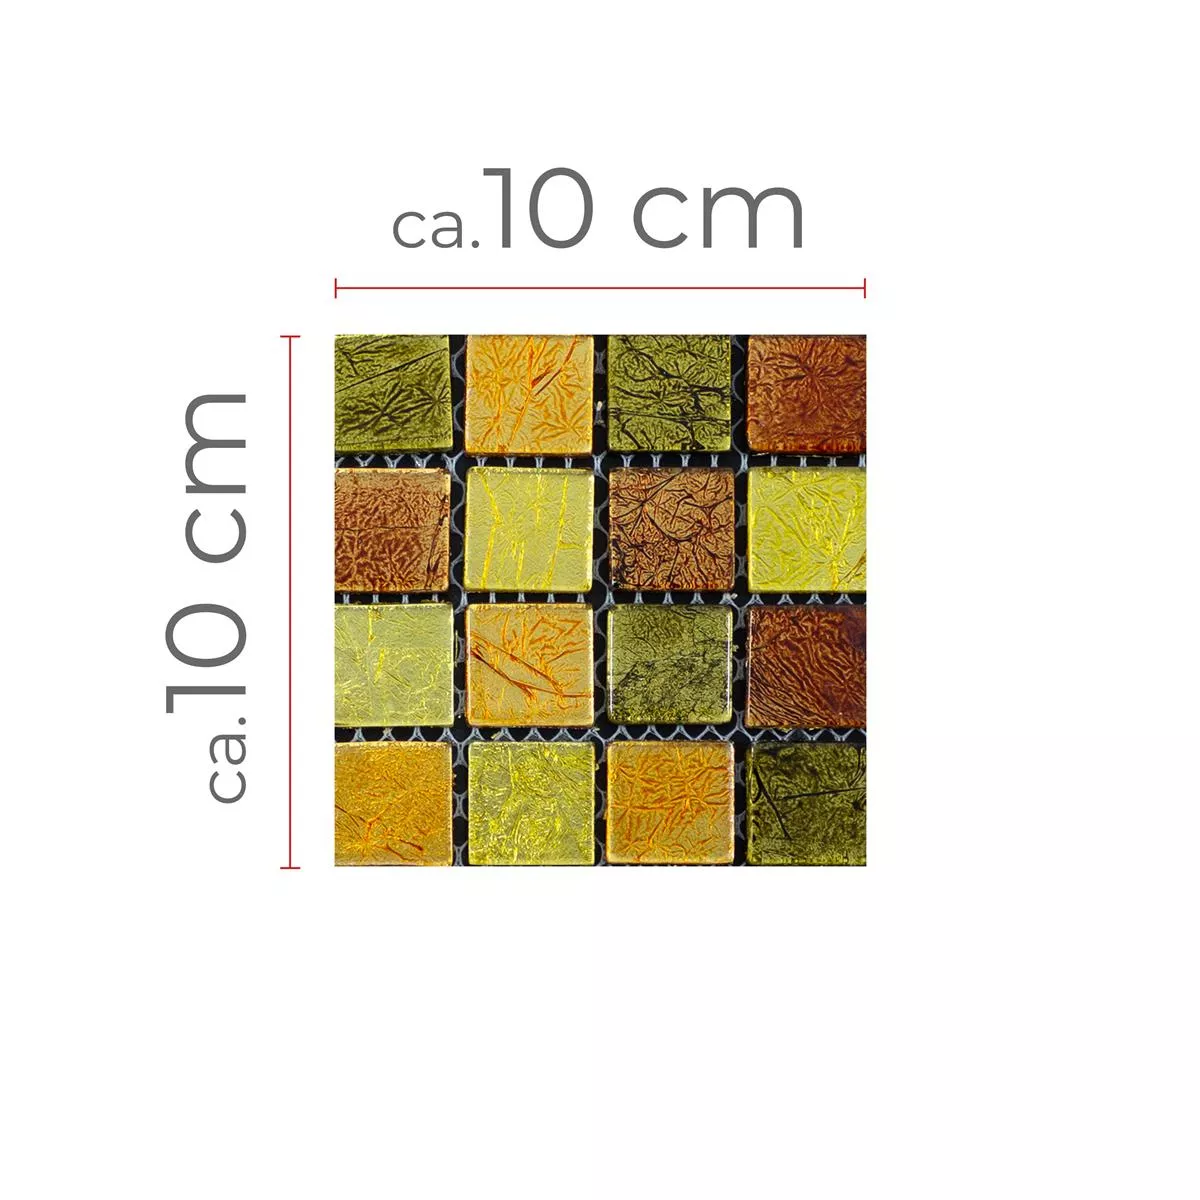 Model Mozaic De Sticlă Gresie Curlew Galben Portocale 23 4mm